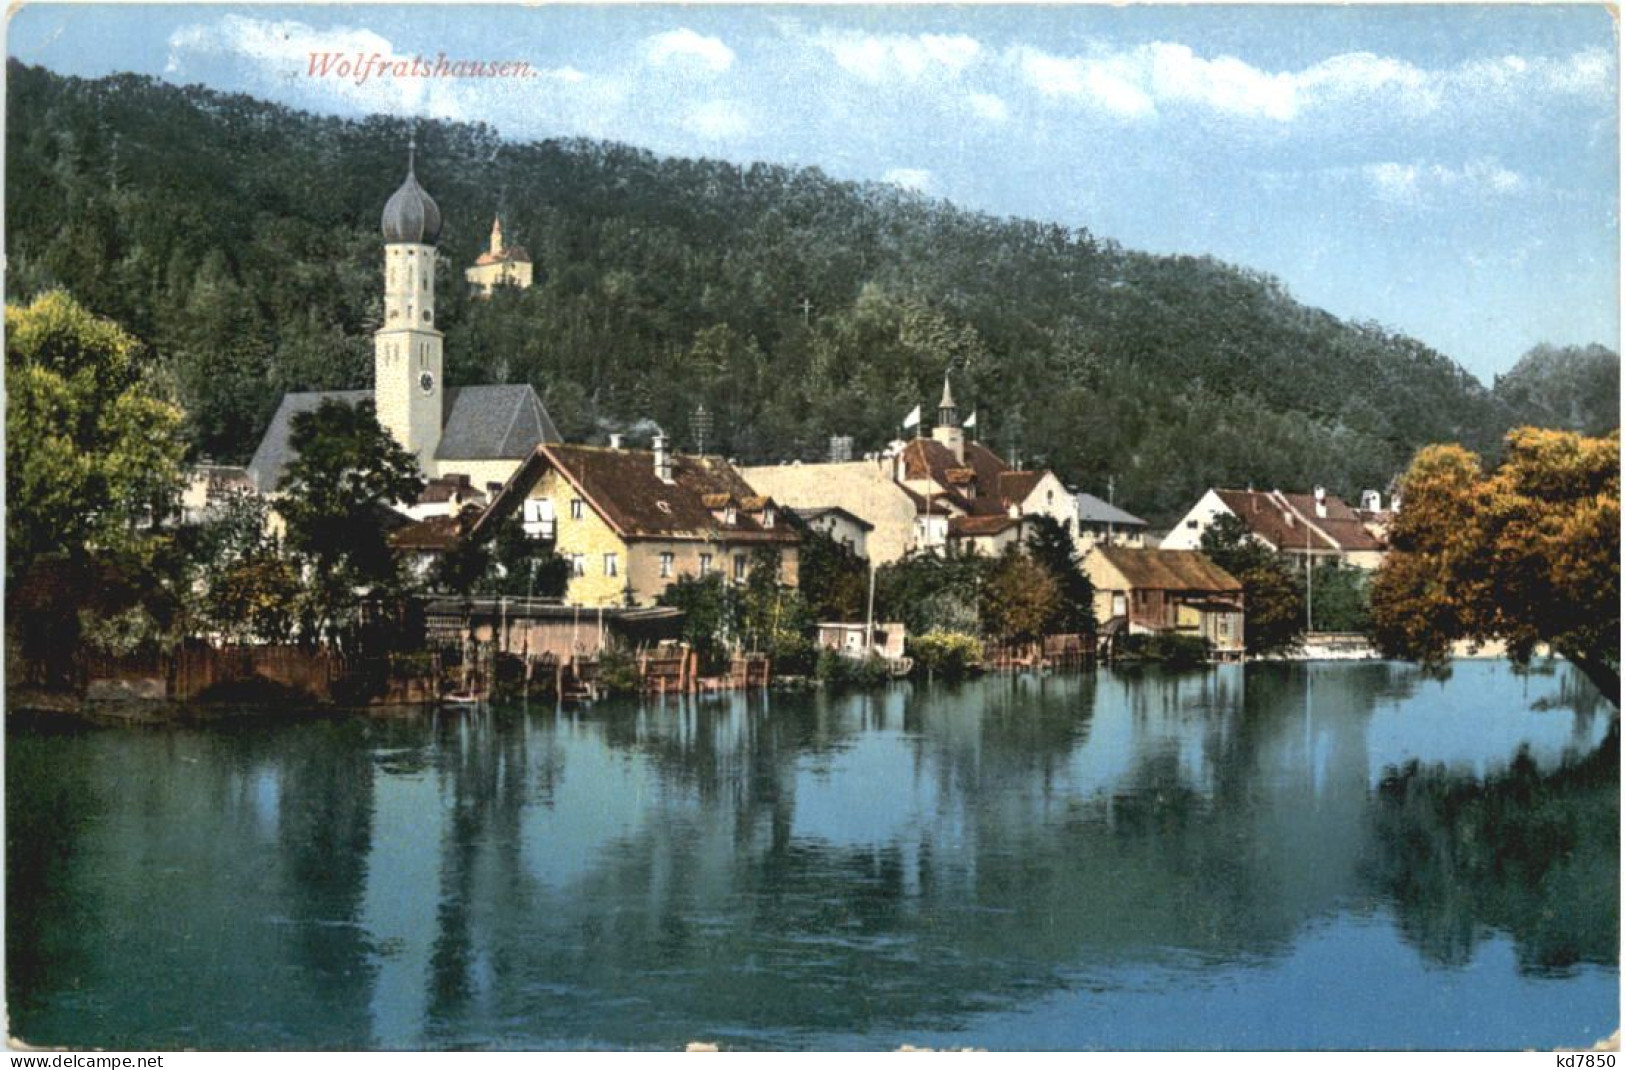 Wolfratshausen - Bad Tölz